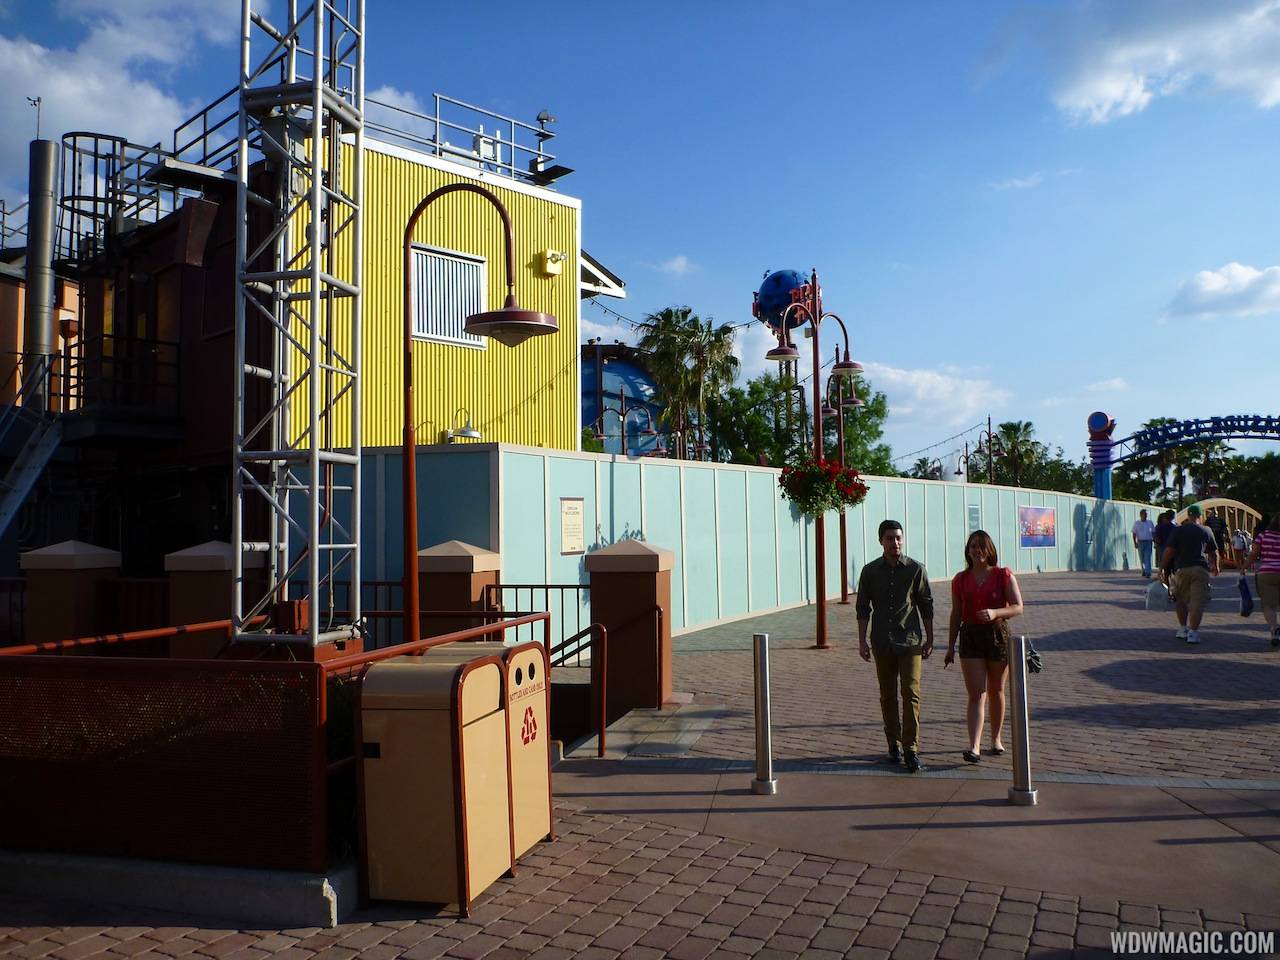 PHOTOS - Construction walls up on Pleasure Island to begin Disney Springs work